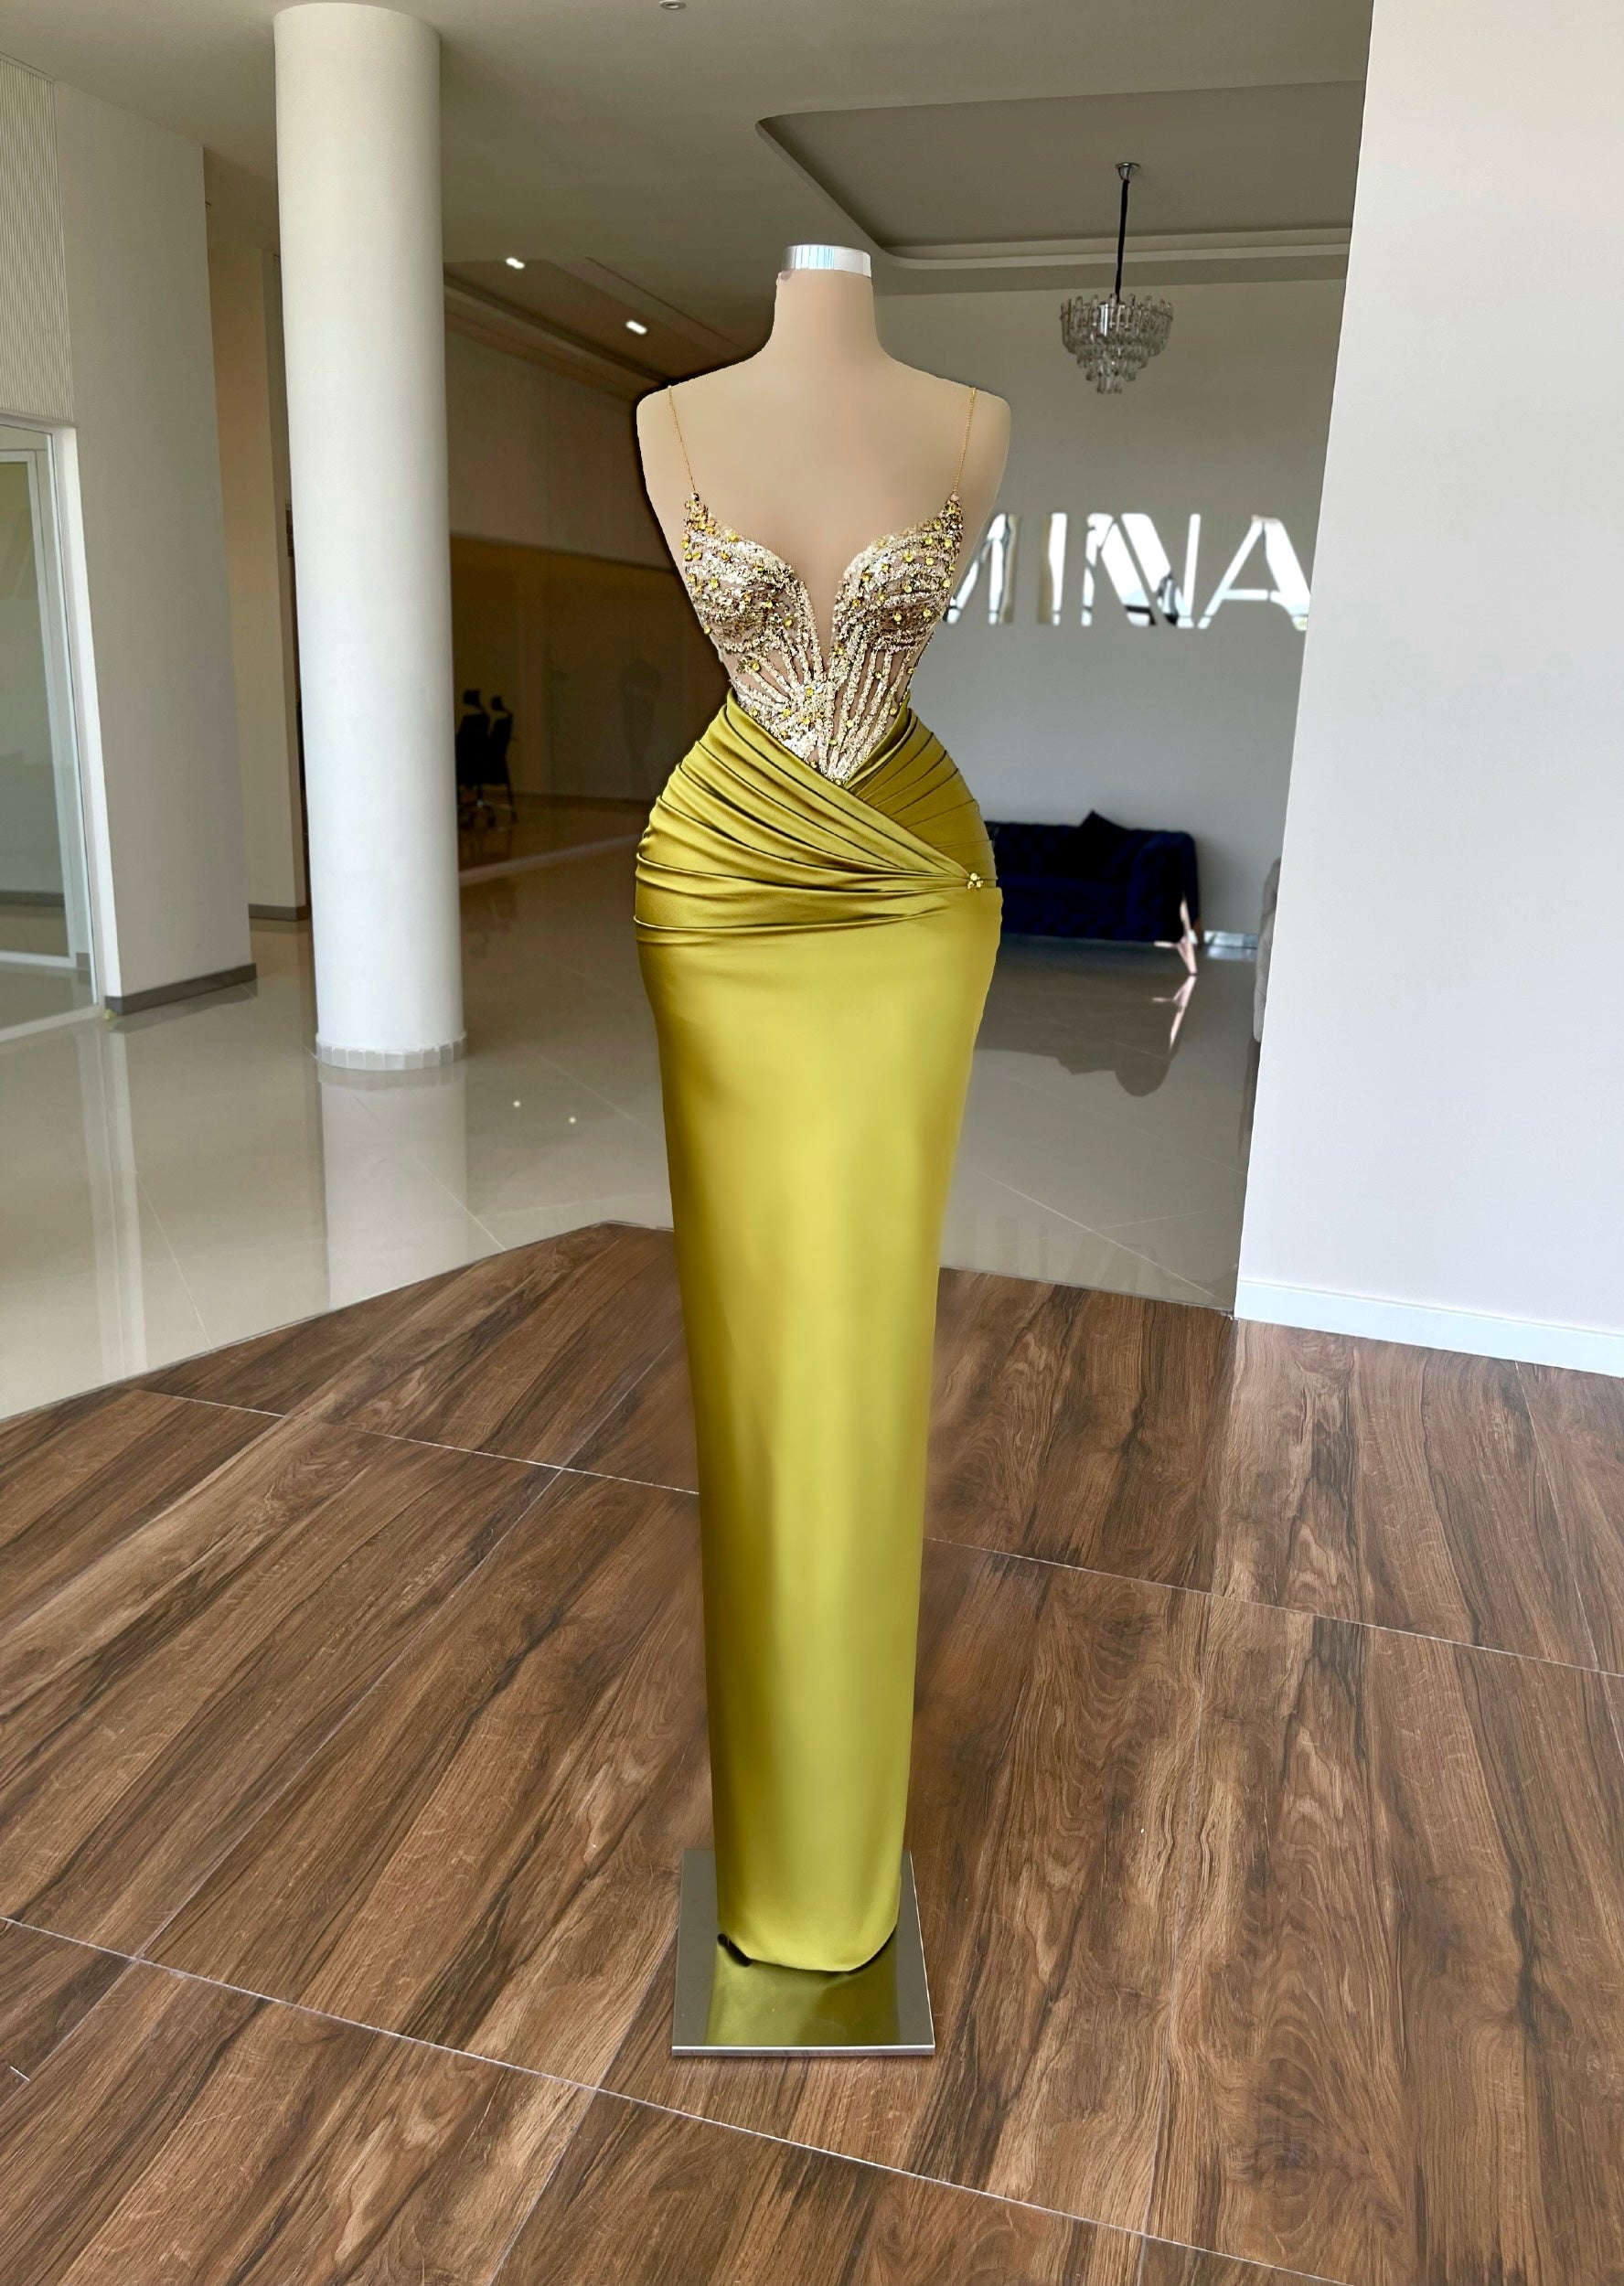 Irena - Minna Fashion